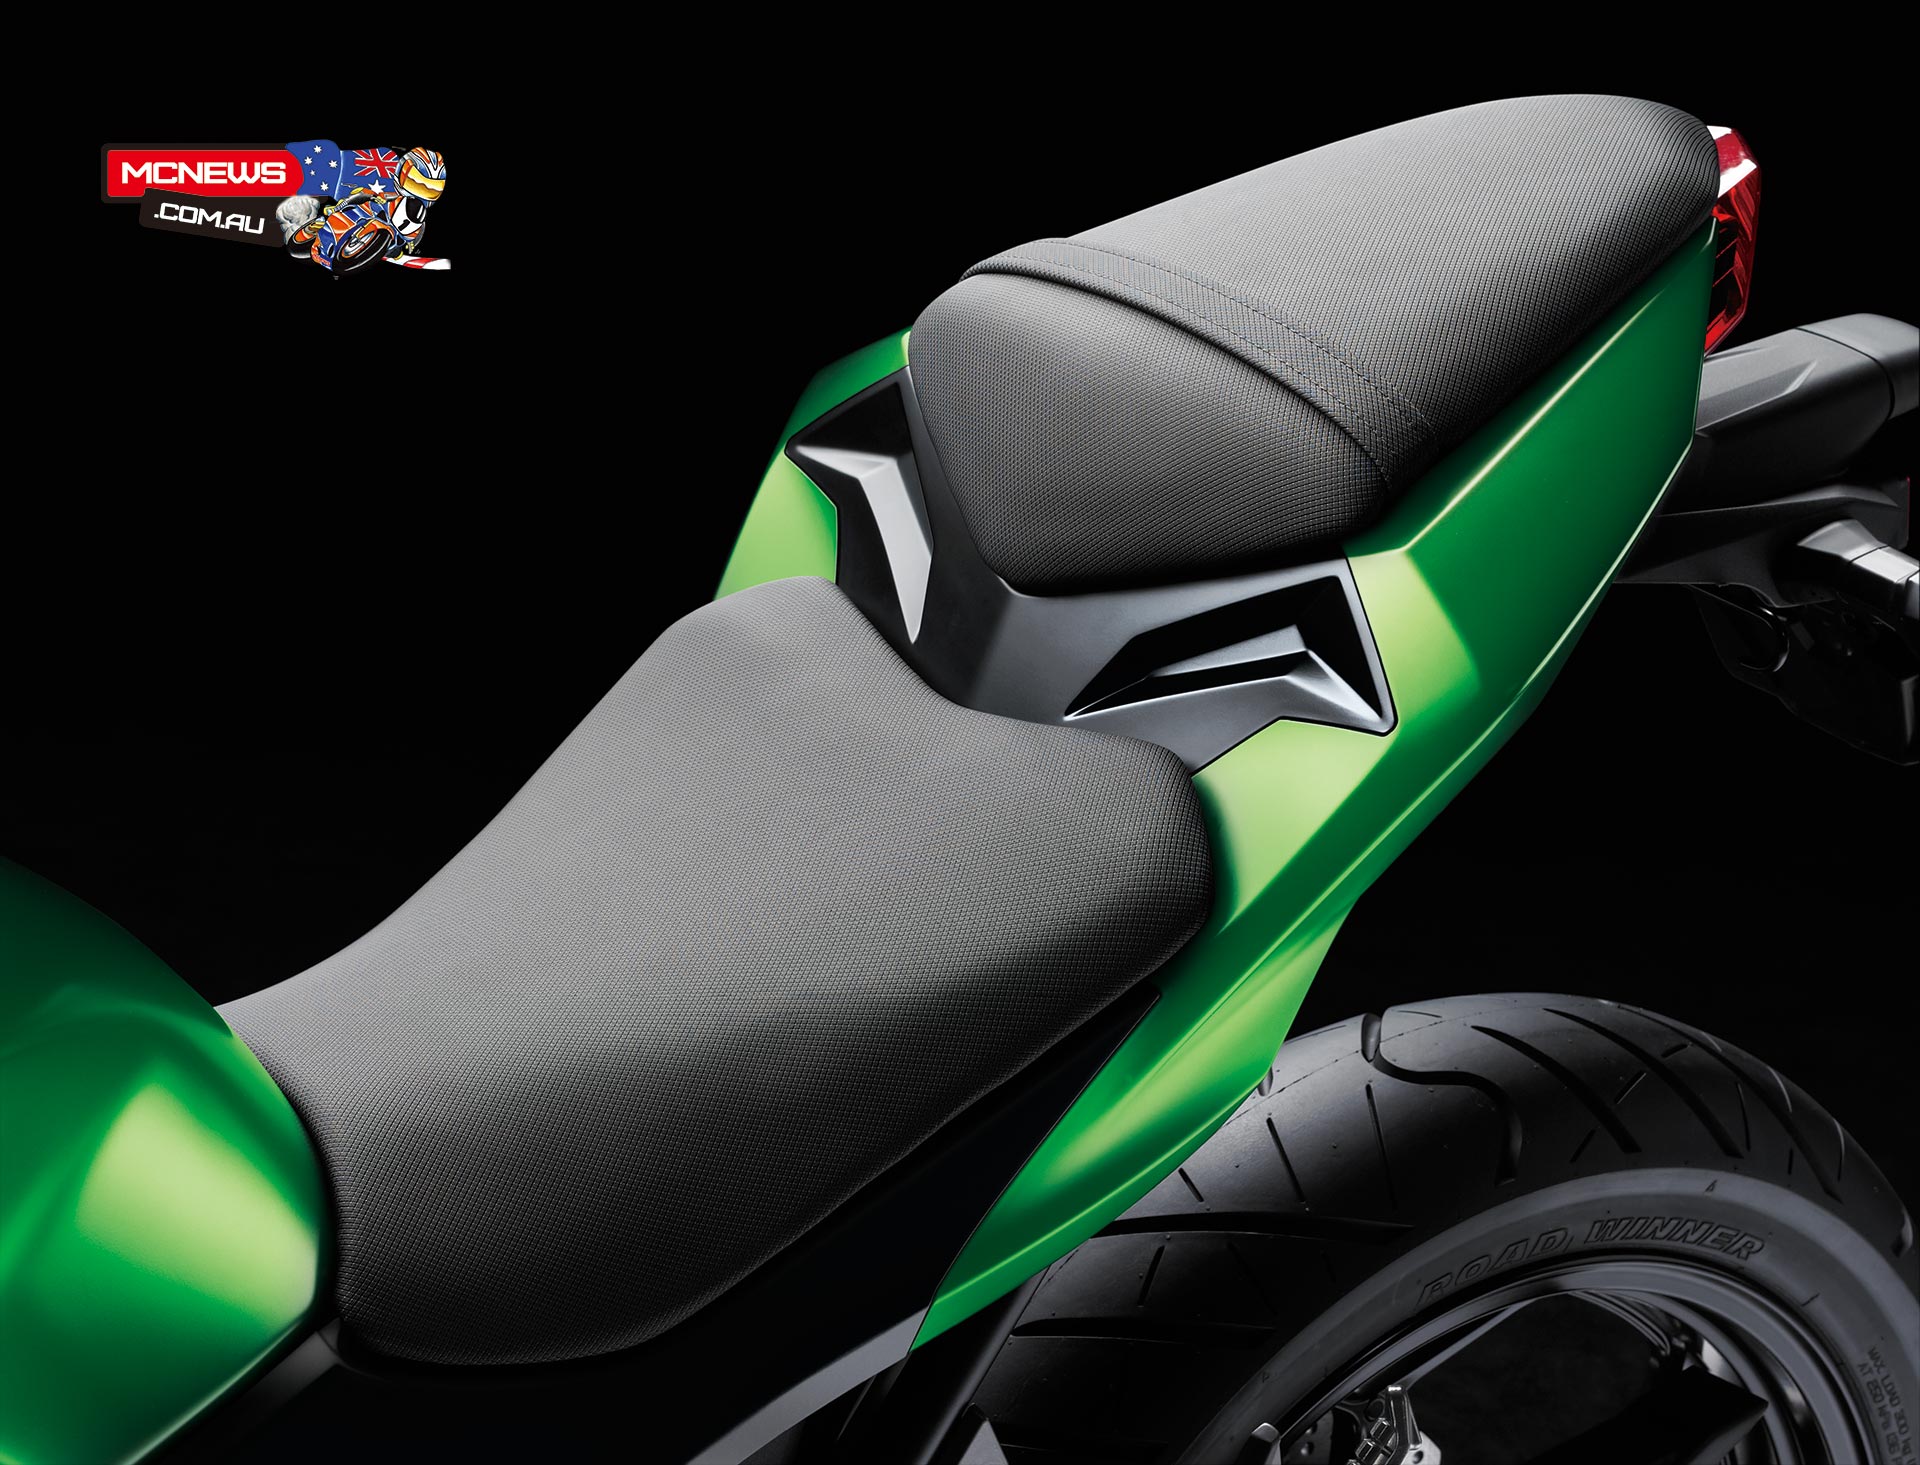 Kawasaki Z300 ABS - Ninja 300 goes naked | MCNews